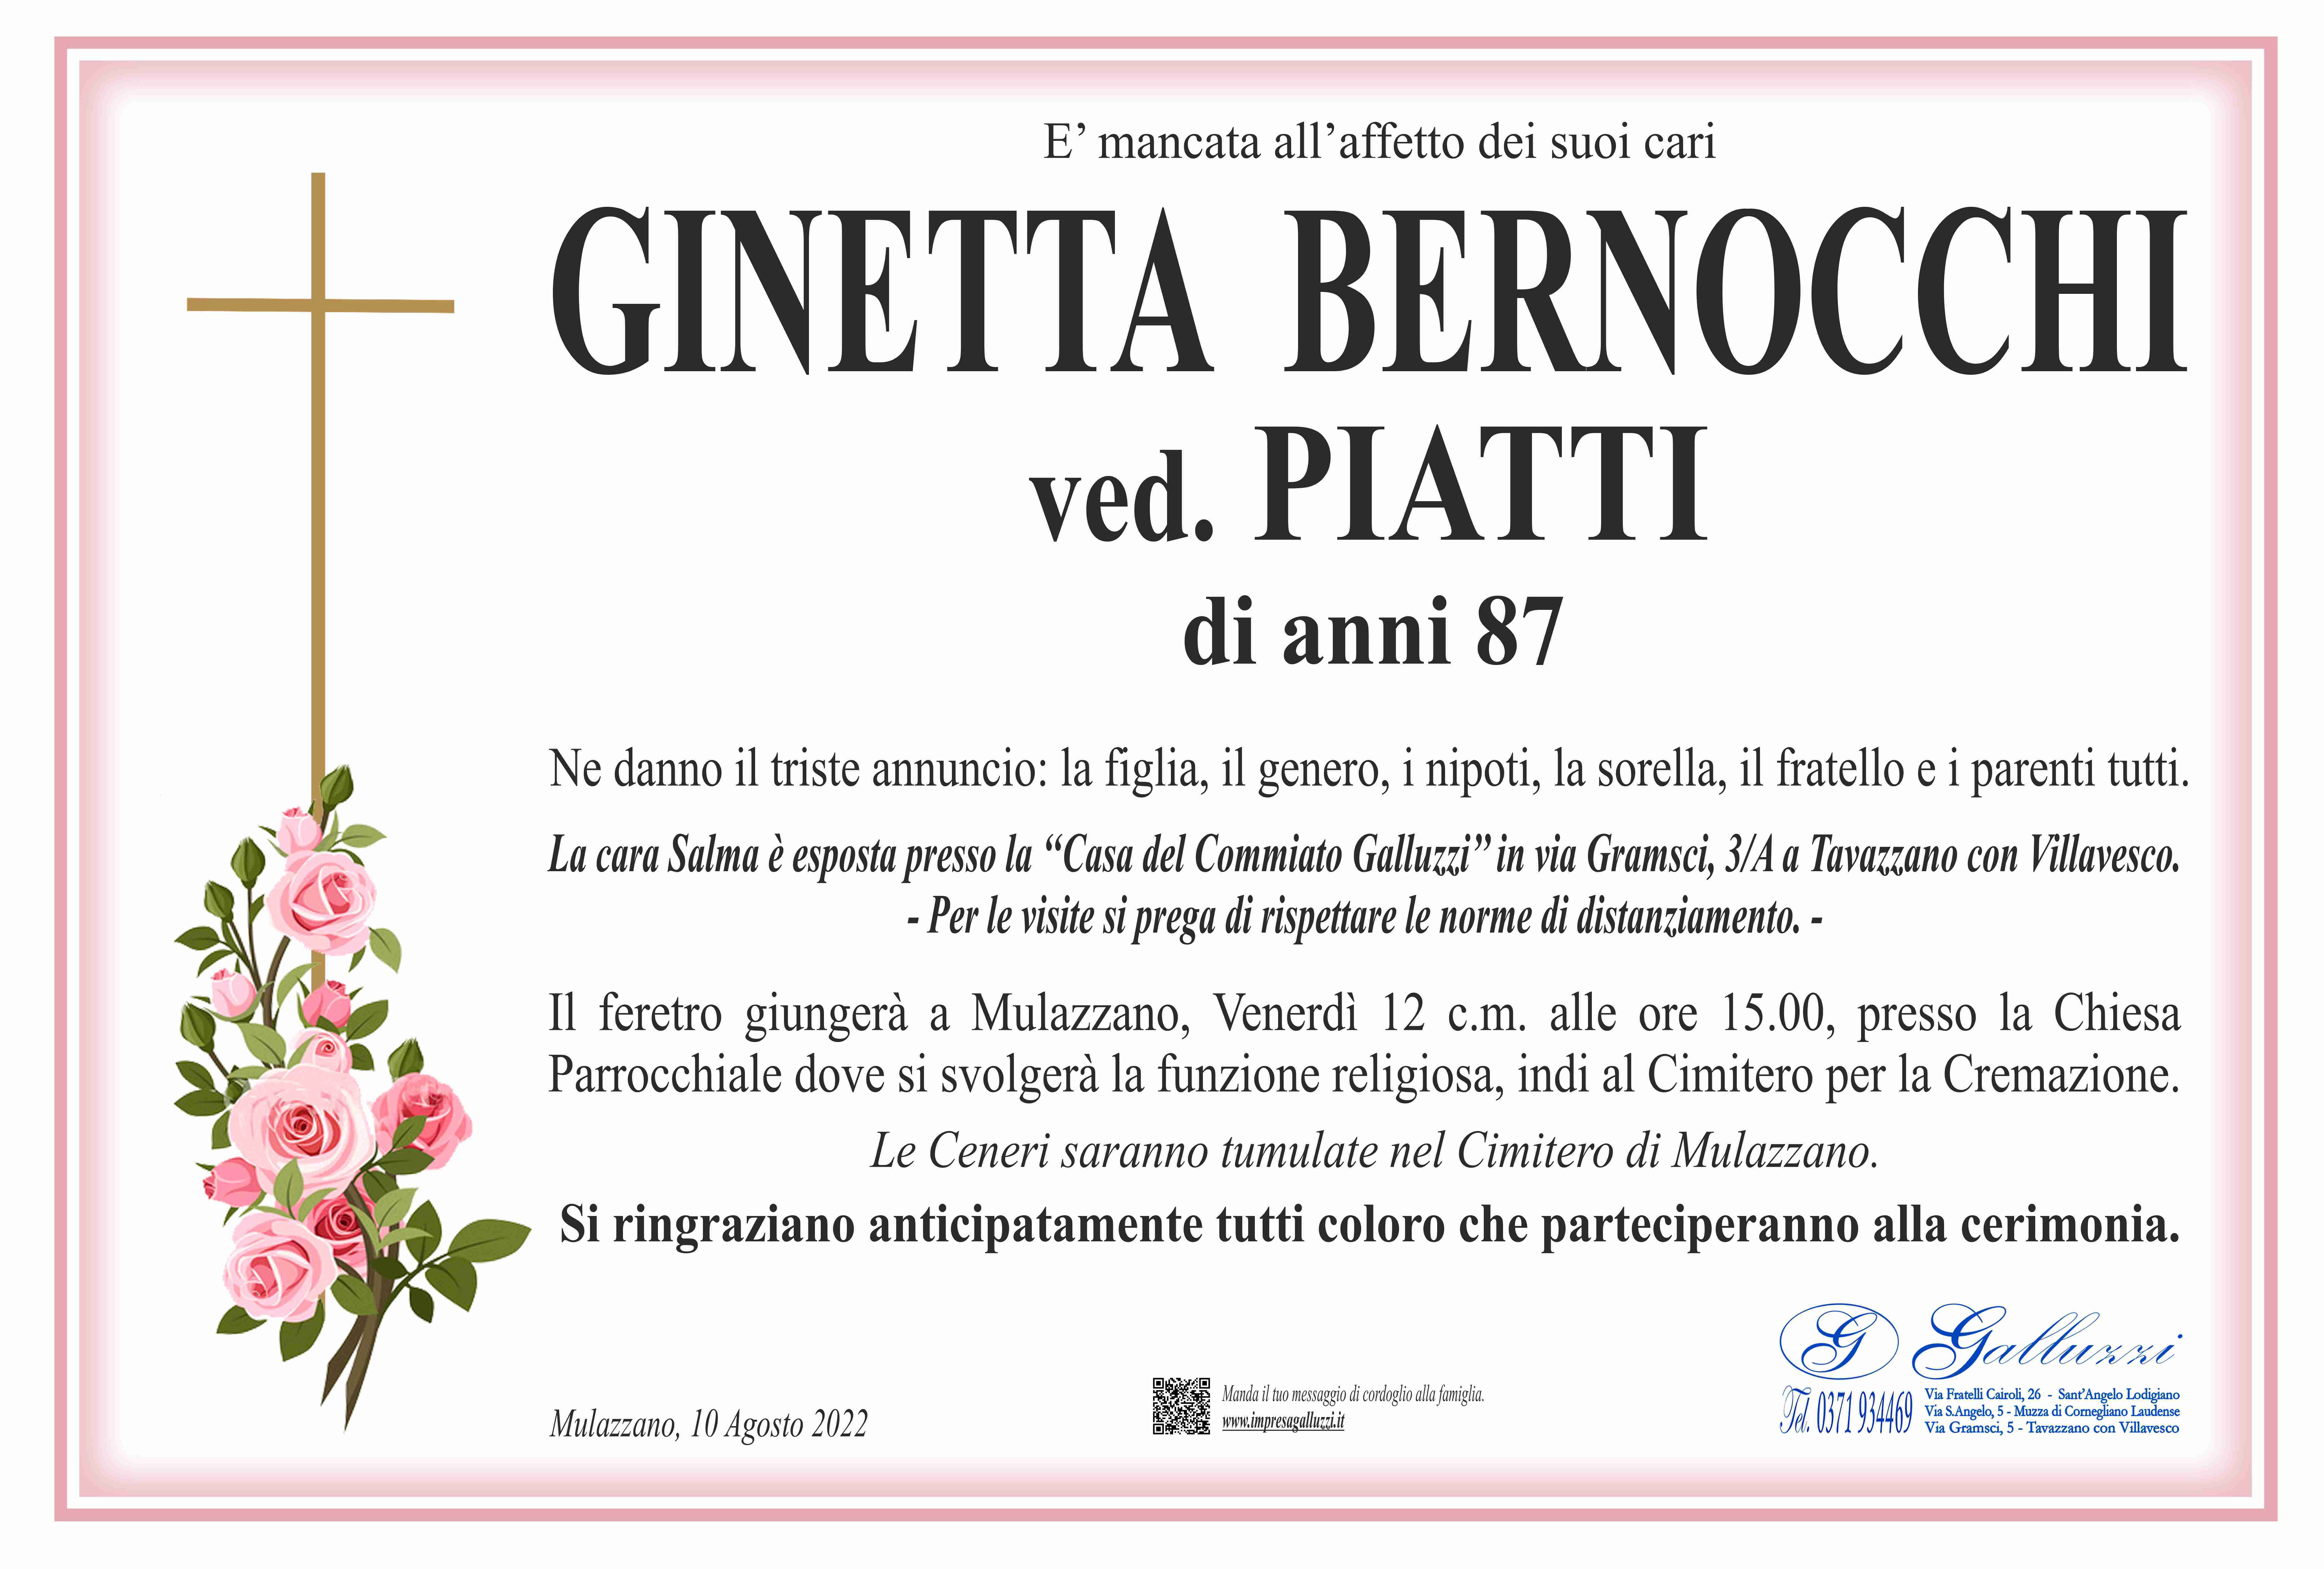 Ginetta Bernocchi